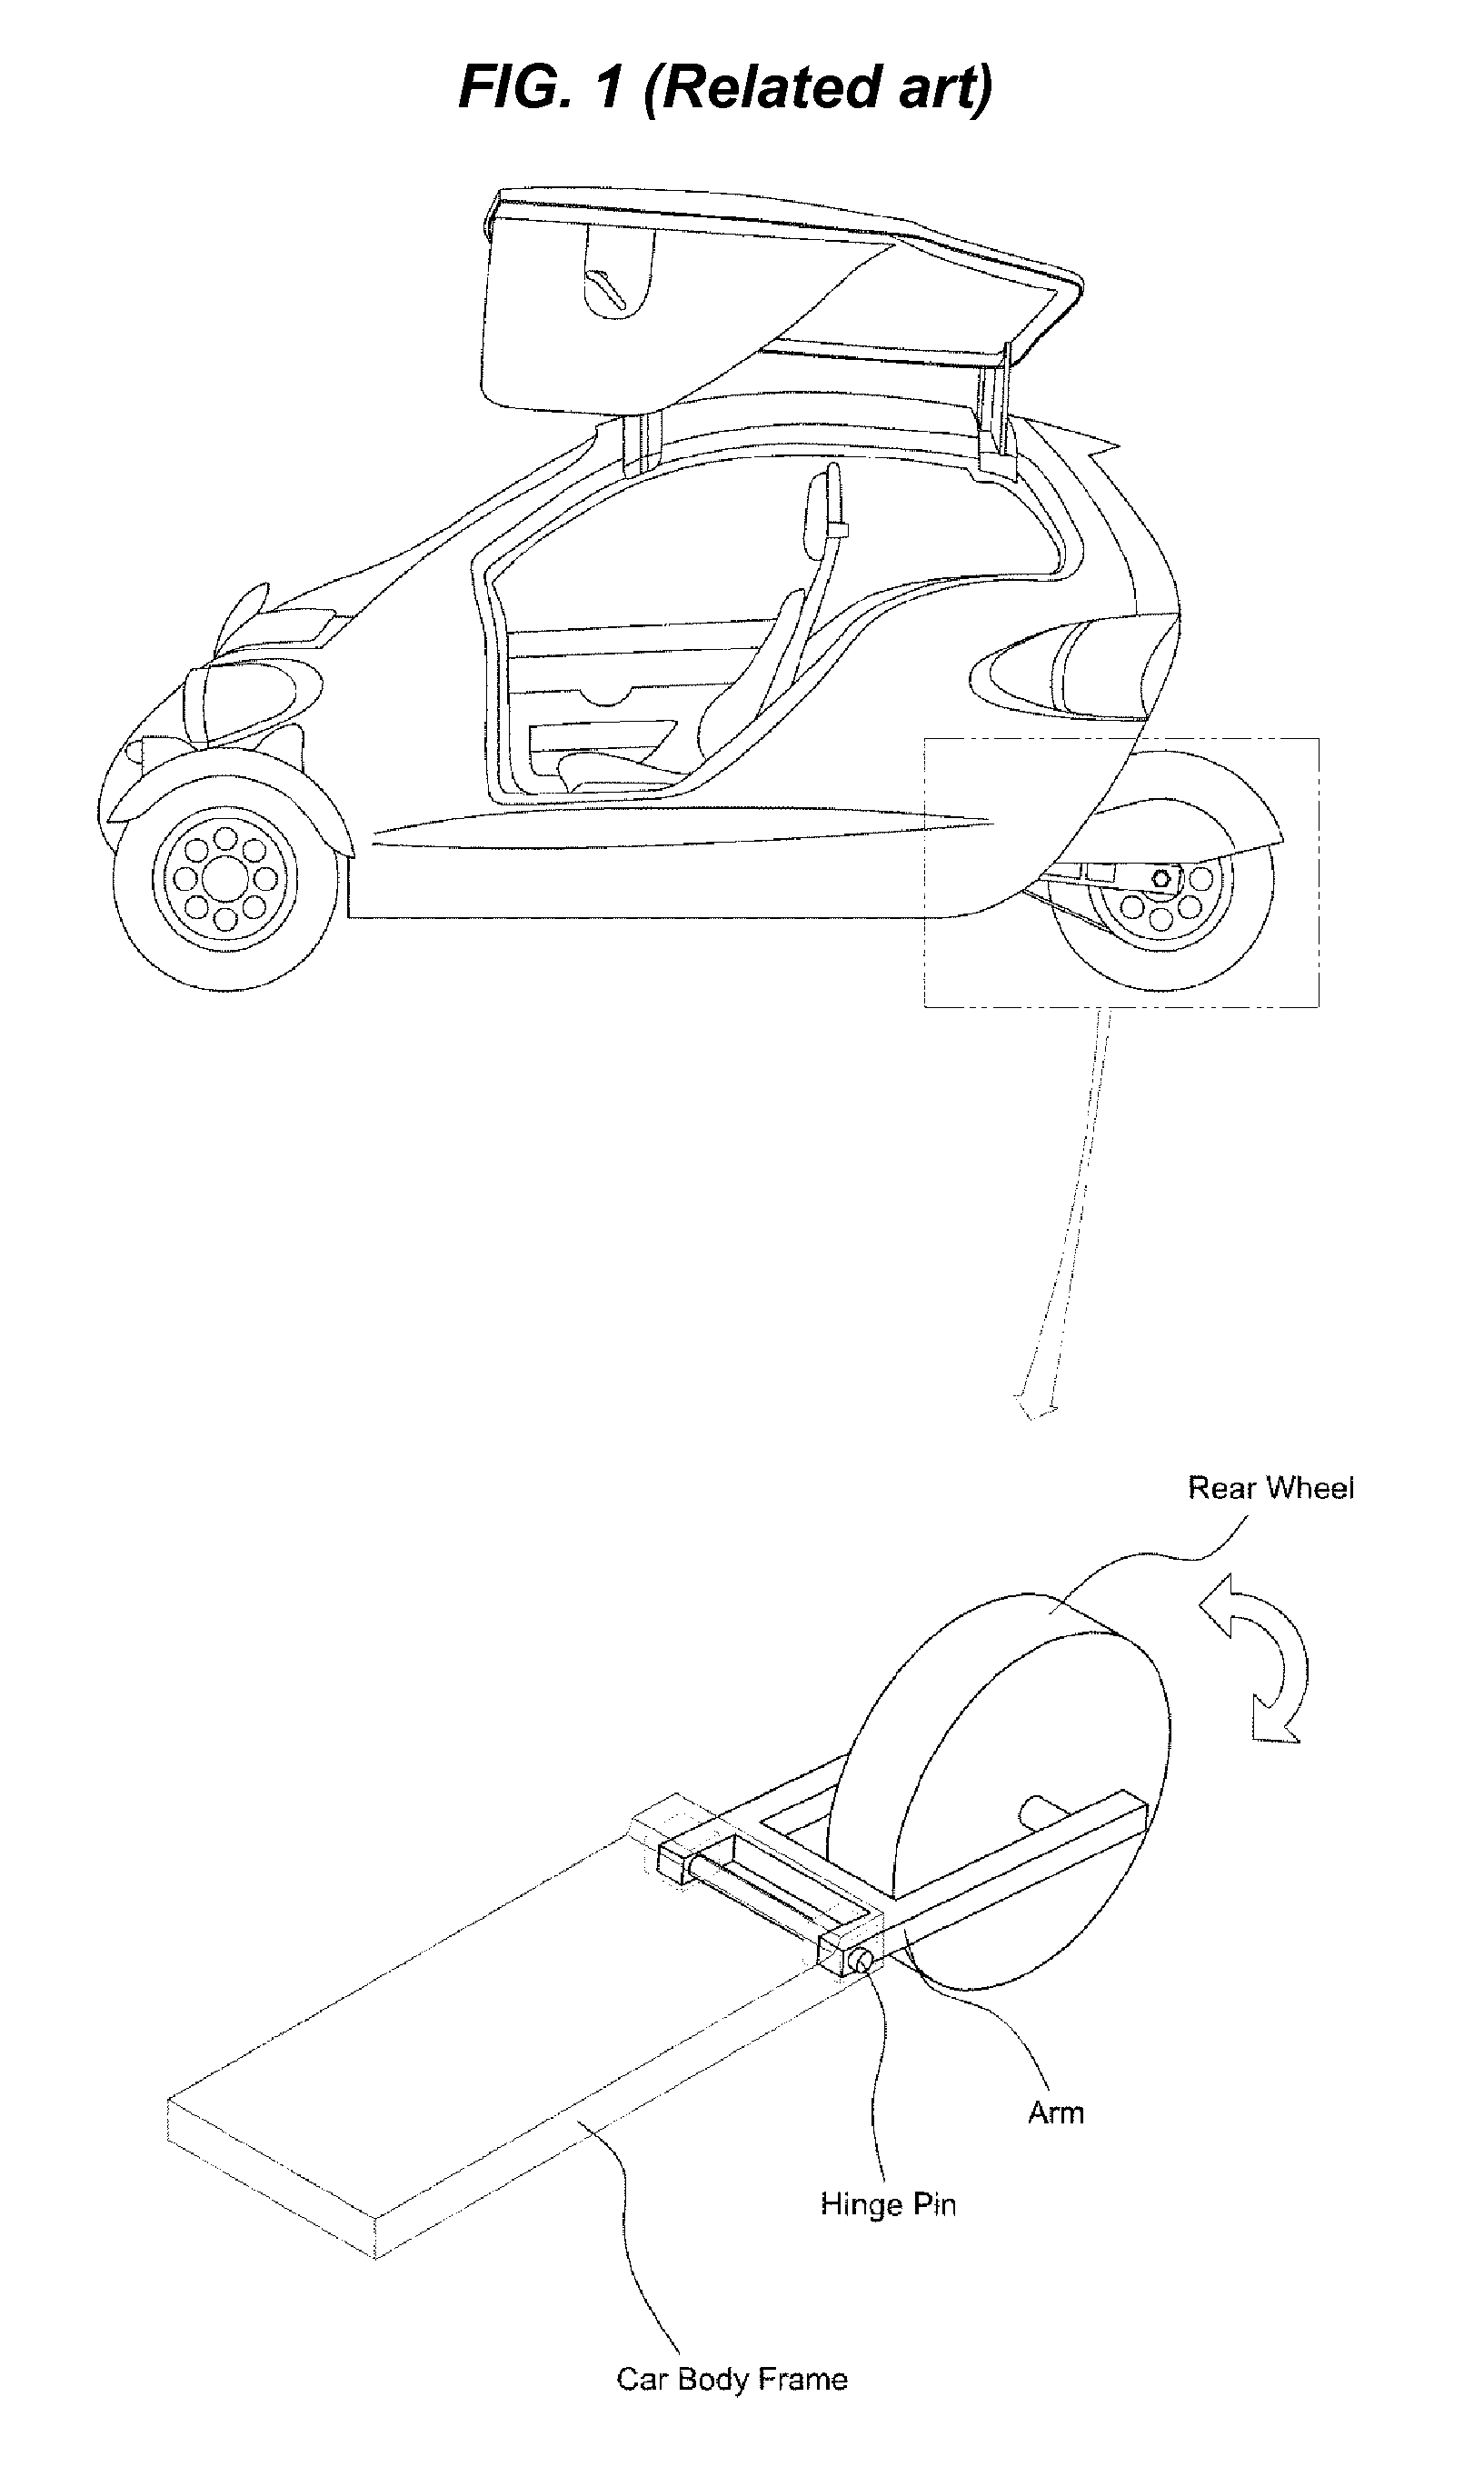 Rear suspension for three-wheeled car